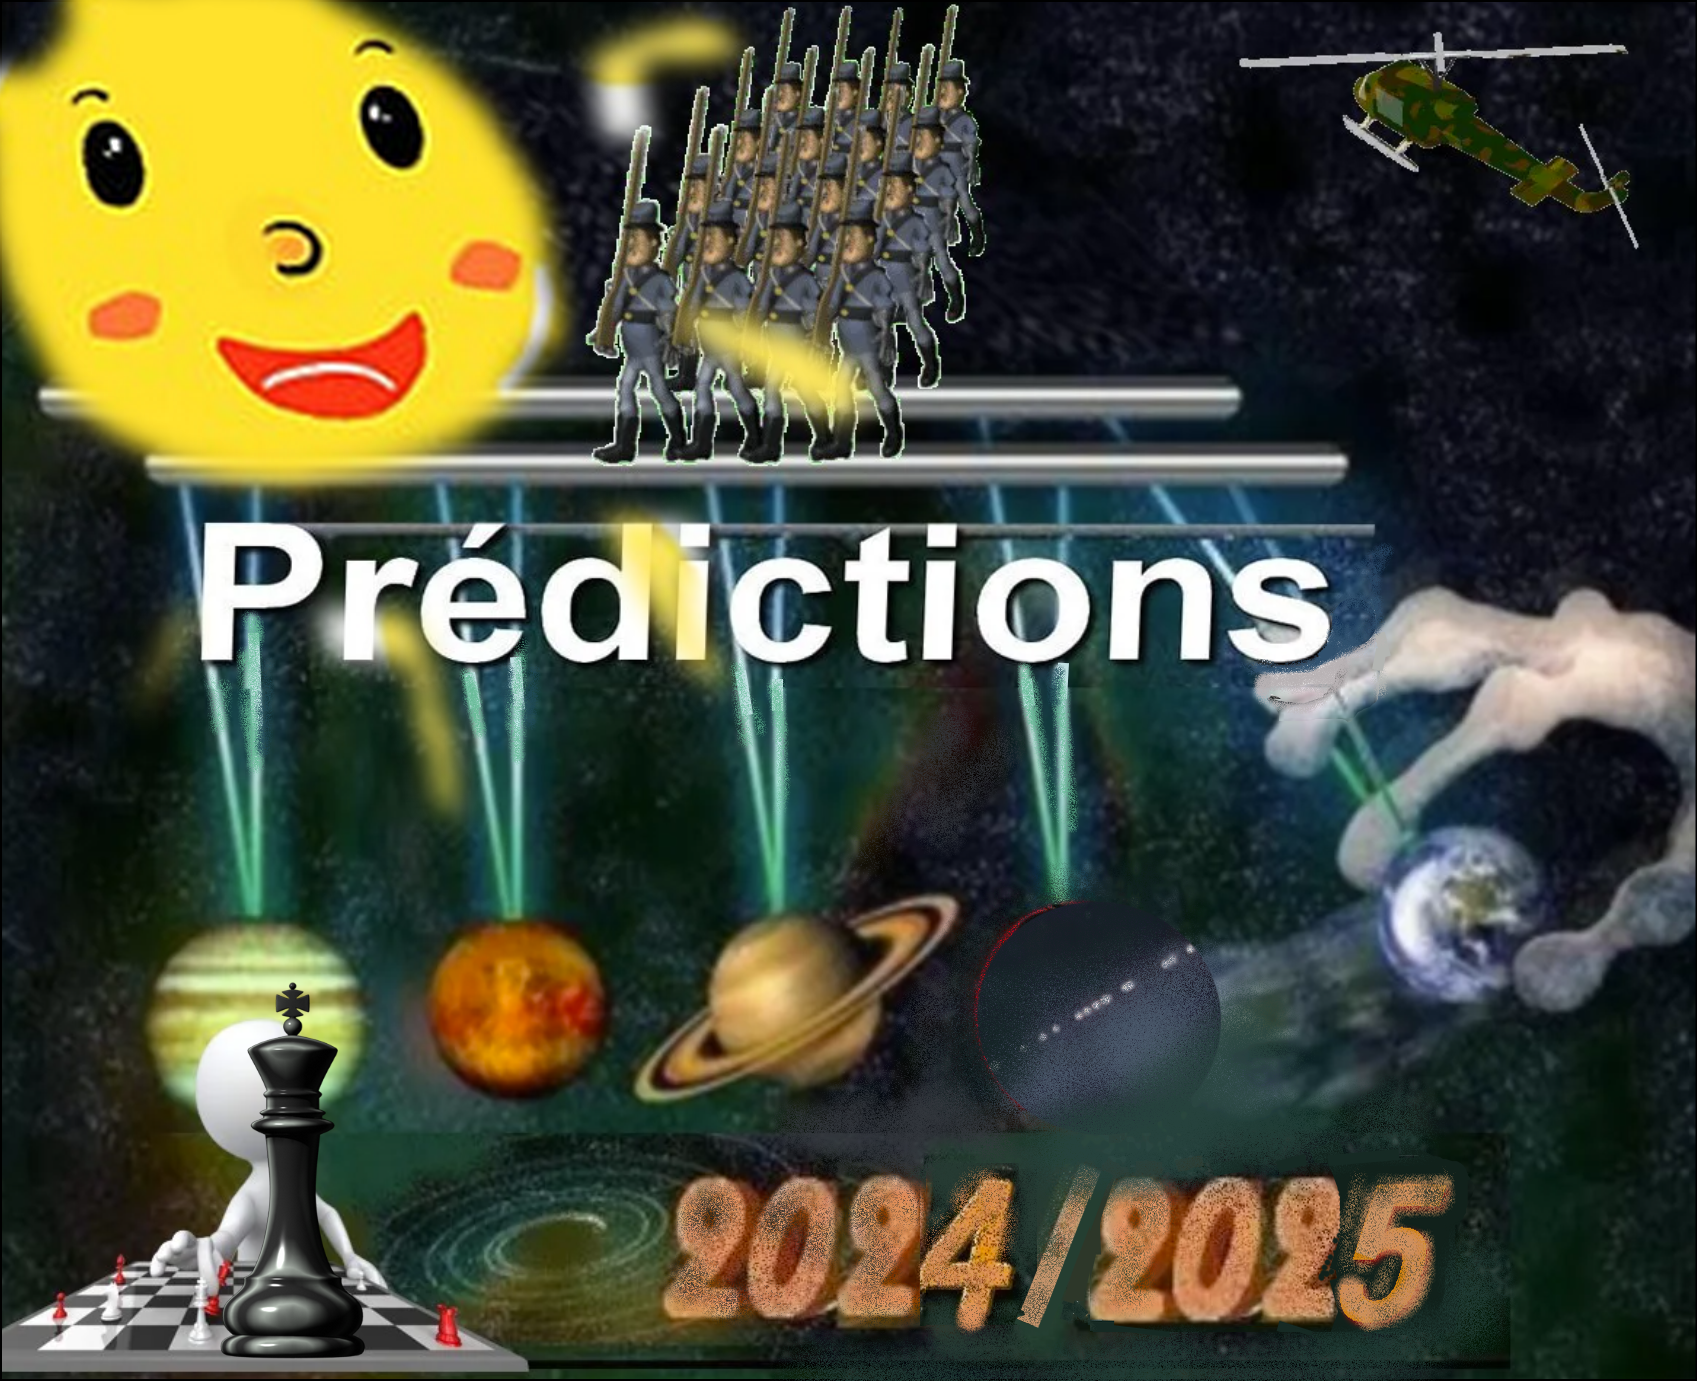 Predictions 2024/2025